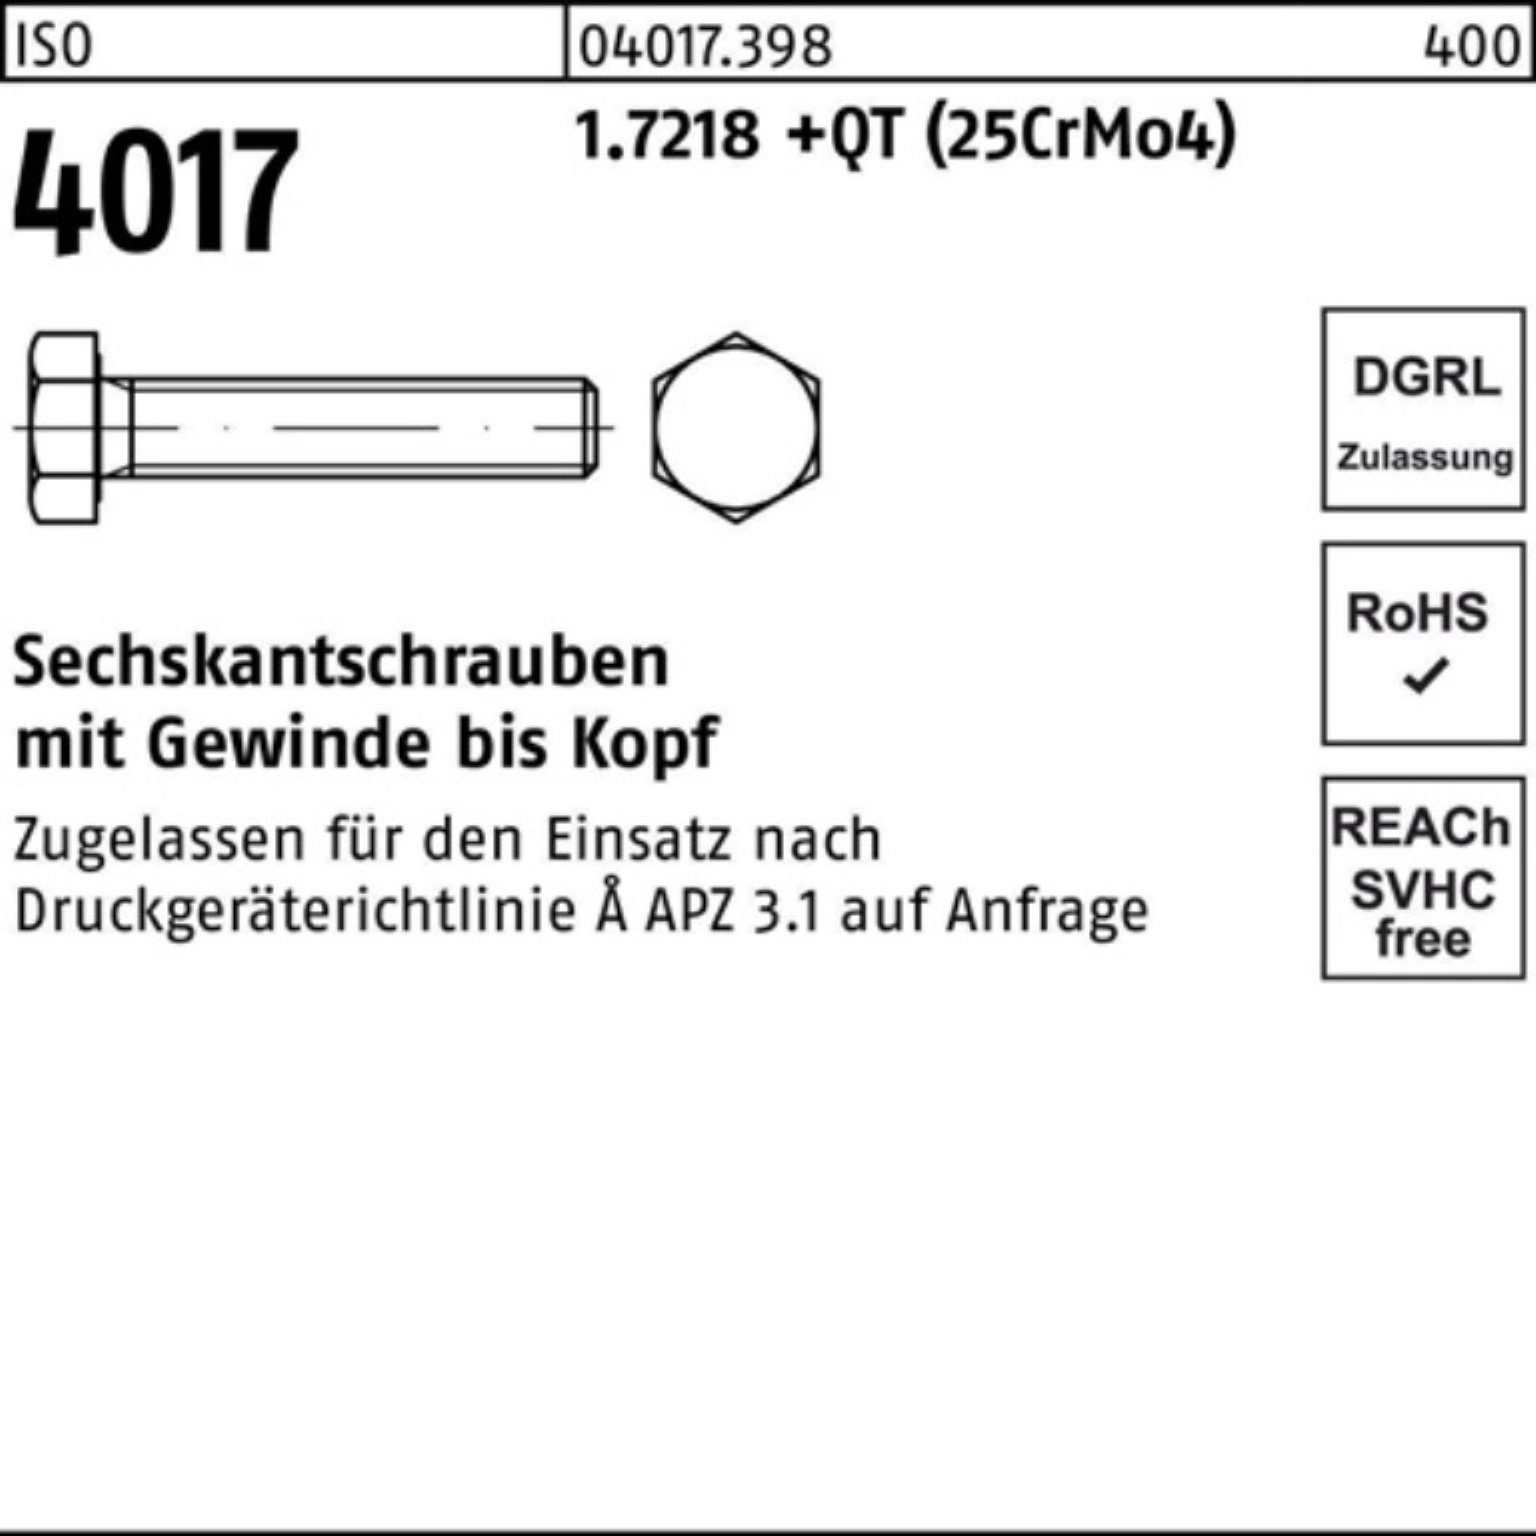 Bufab Sechskantschraube 100er Pack Sechskantschraube 1.7218 (25CrMo4) 4017 VG M33x ISO +QT 110